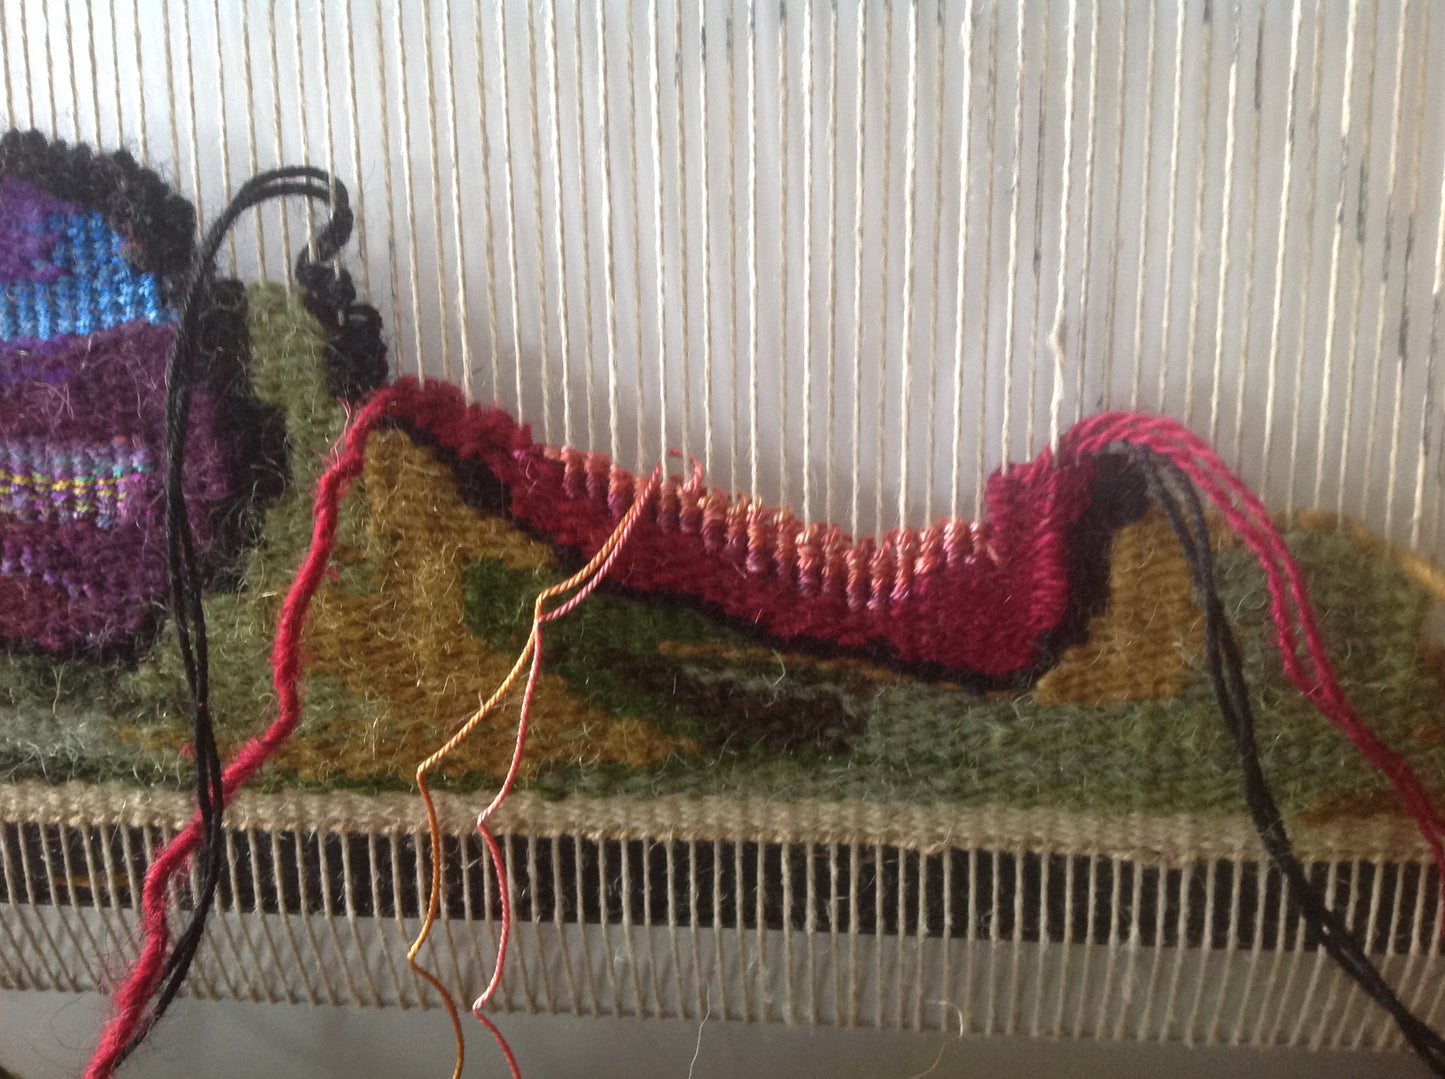 Tapestry or Weaving?